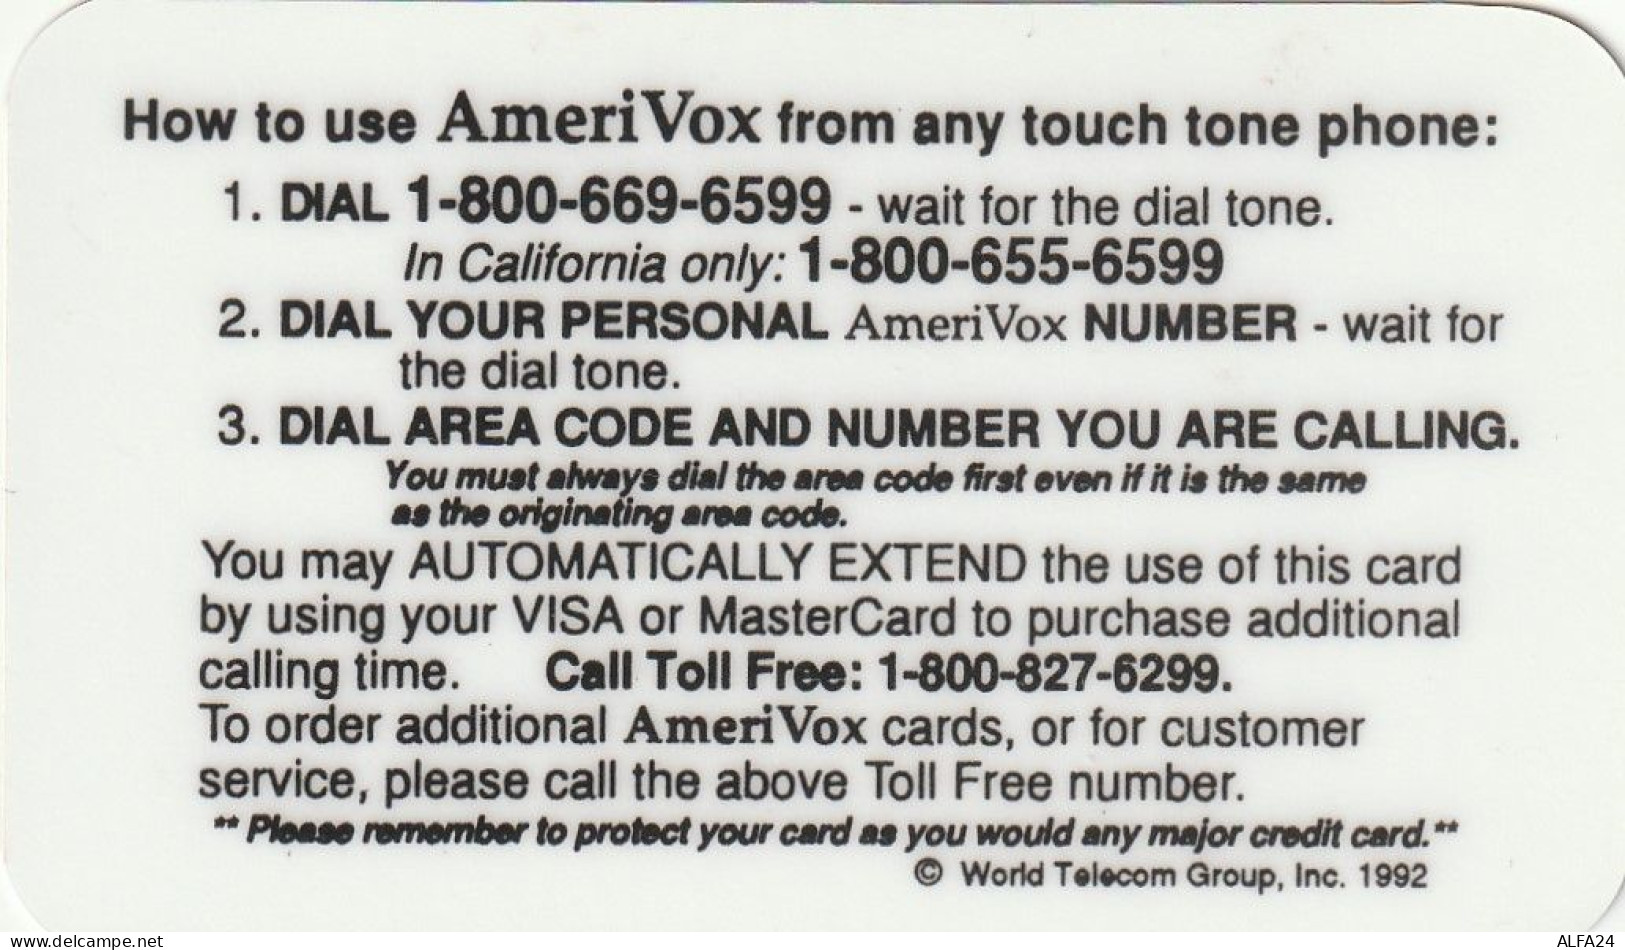 PREPAID PHONE CARD USA AMERIVOX (CZ74 - Amerivox